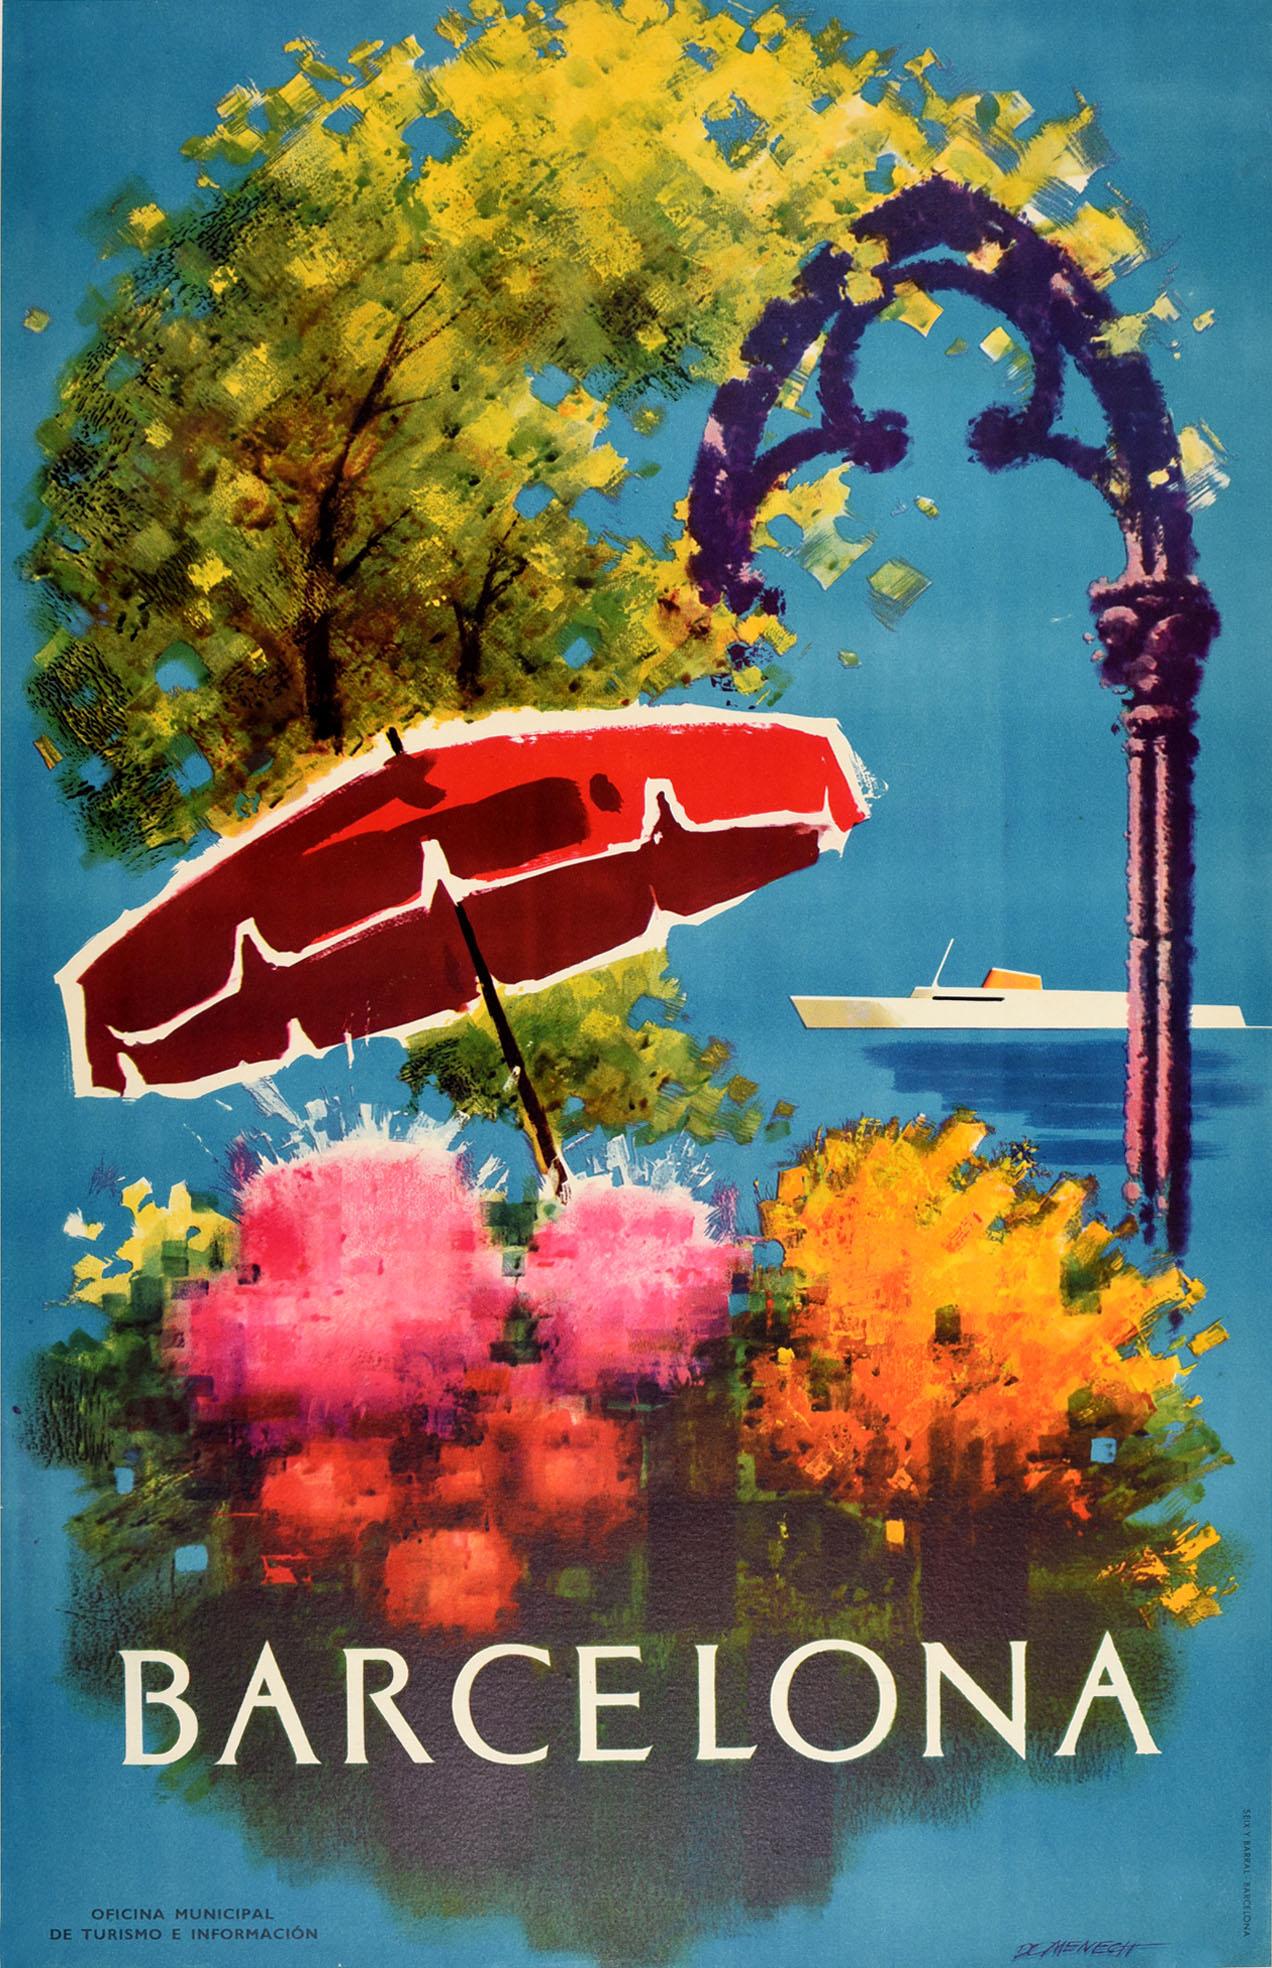 Domenech Print - Original Vintage Poster Barcelona Spain Travel Art Flowers Ship Design Tourism